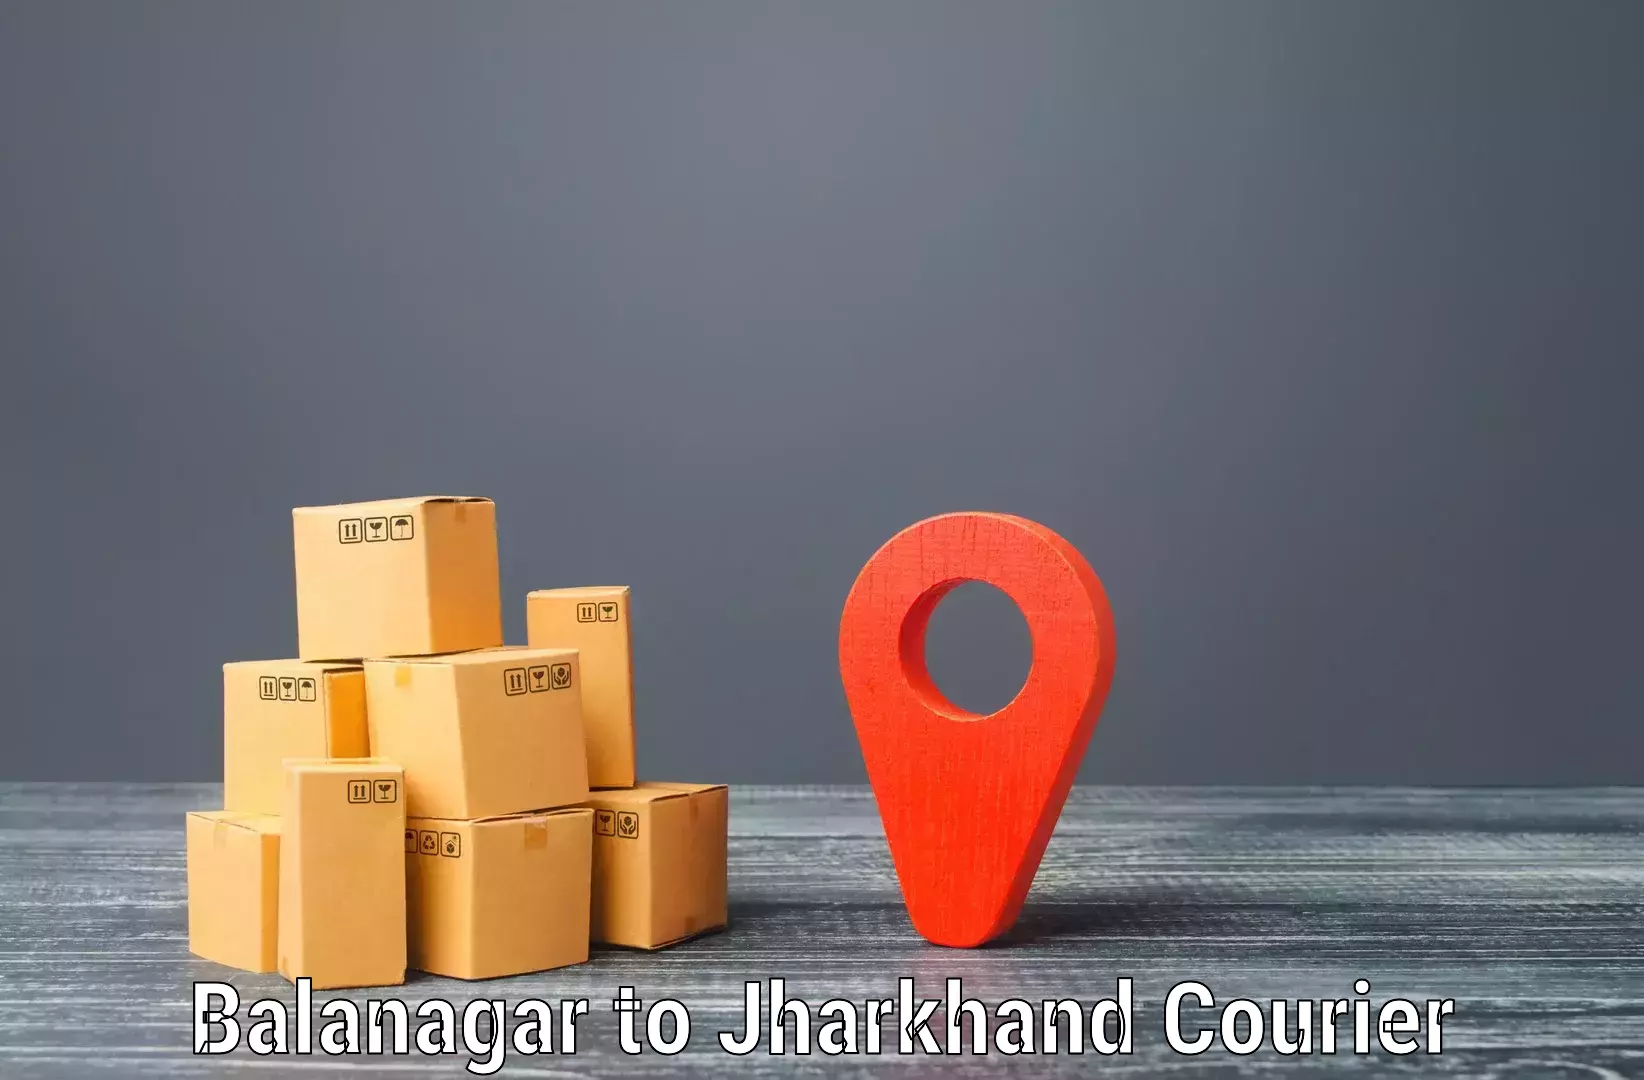 High-capacity courier solutions Balanagar to Poreyahat